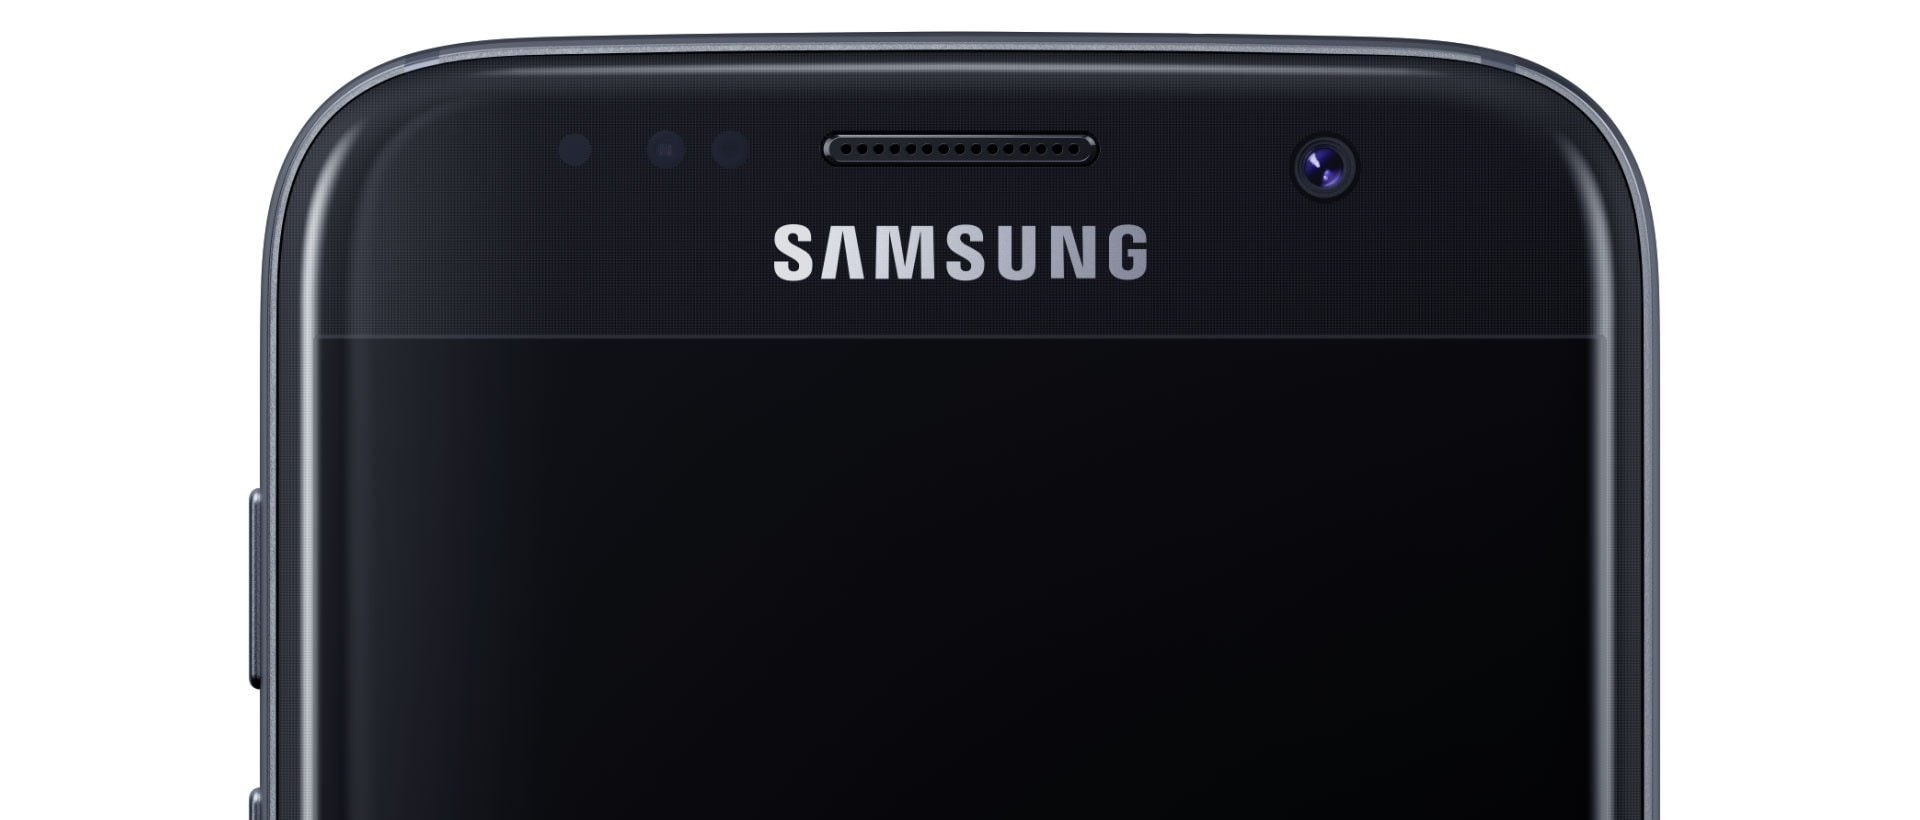 Localiser le Samsung Galaxy S8 avec une app tierce